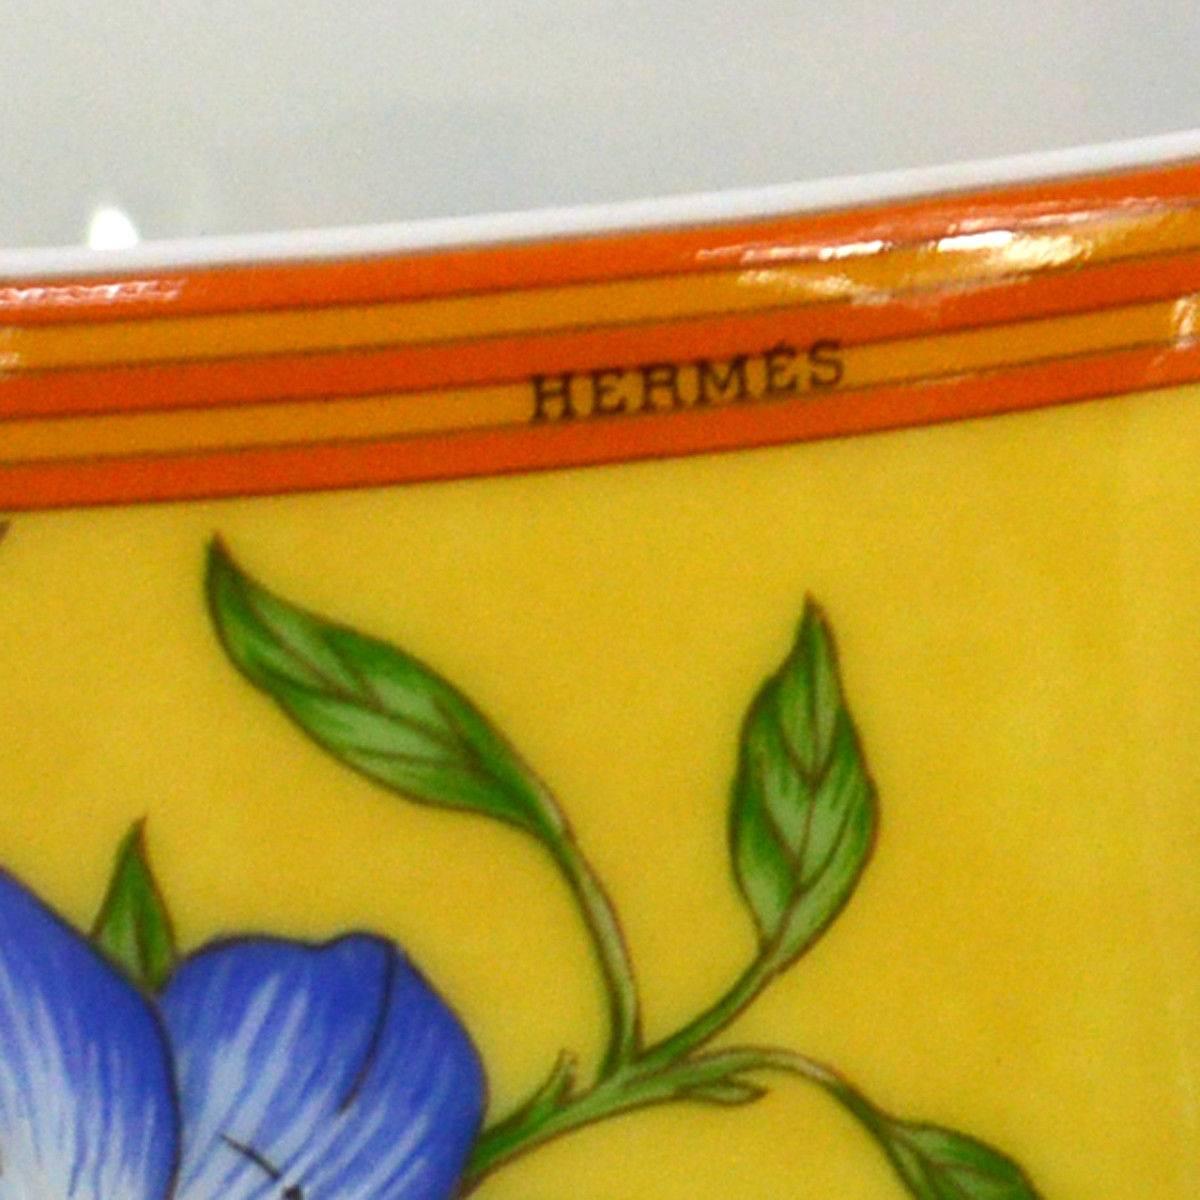 Hermes Porcelain Flower Four Piece Table Dishes Tea Set in Box

Porcelain 
Signed
Cups measure 3.25" W x 2.5" H 
Plates diameter 6"
Includes original Hermes box